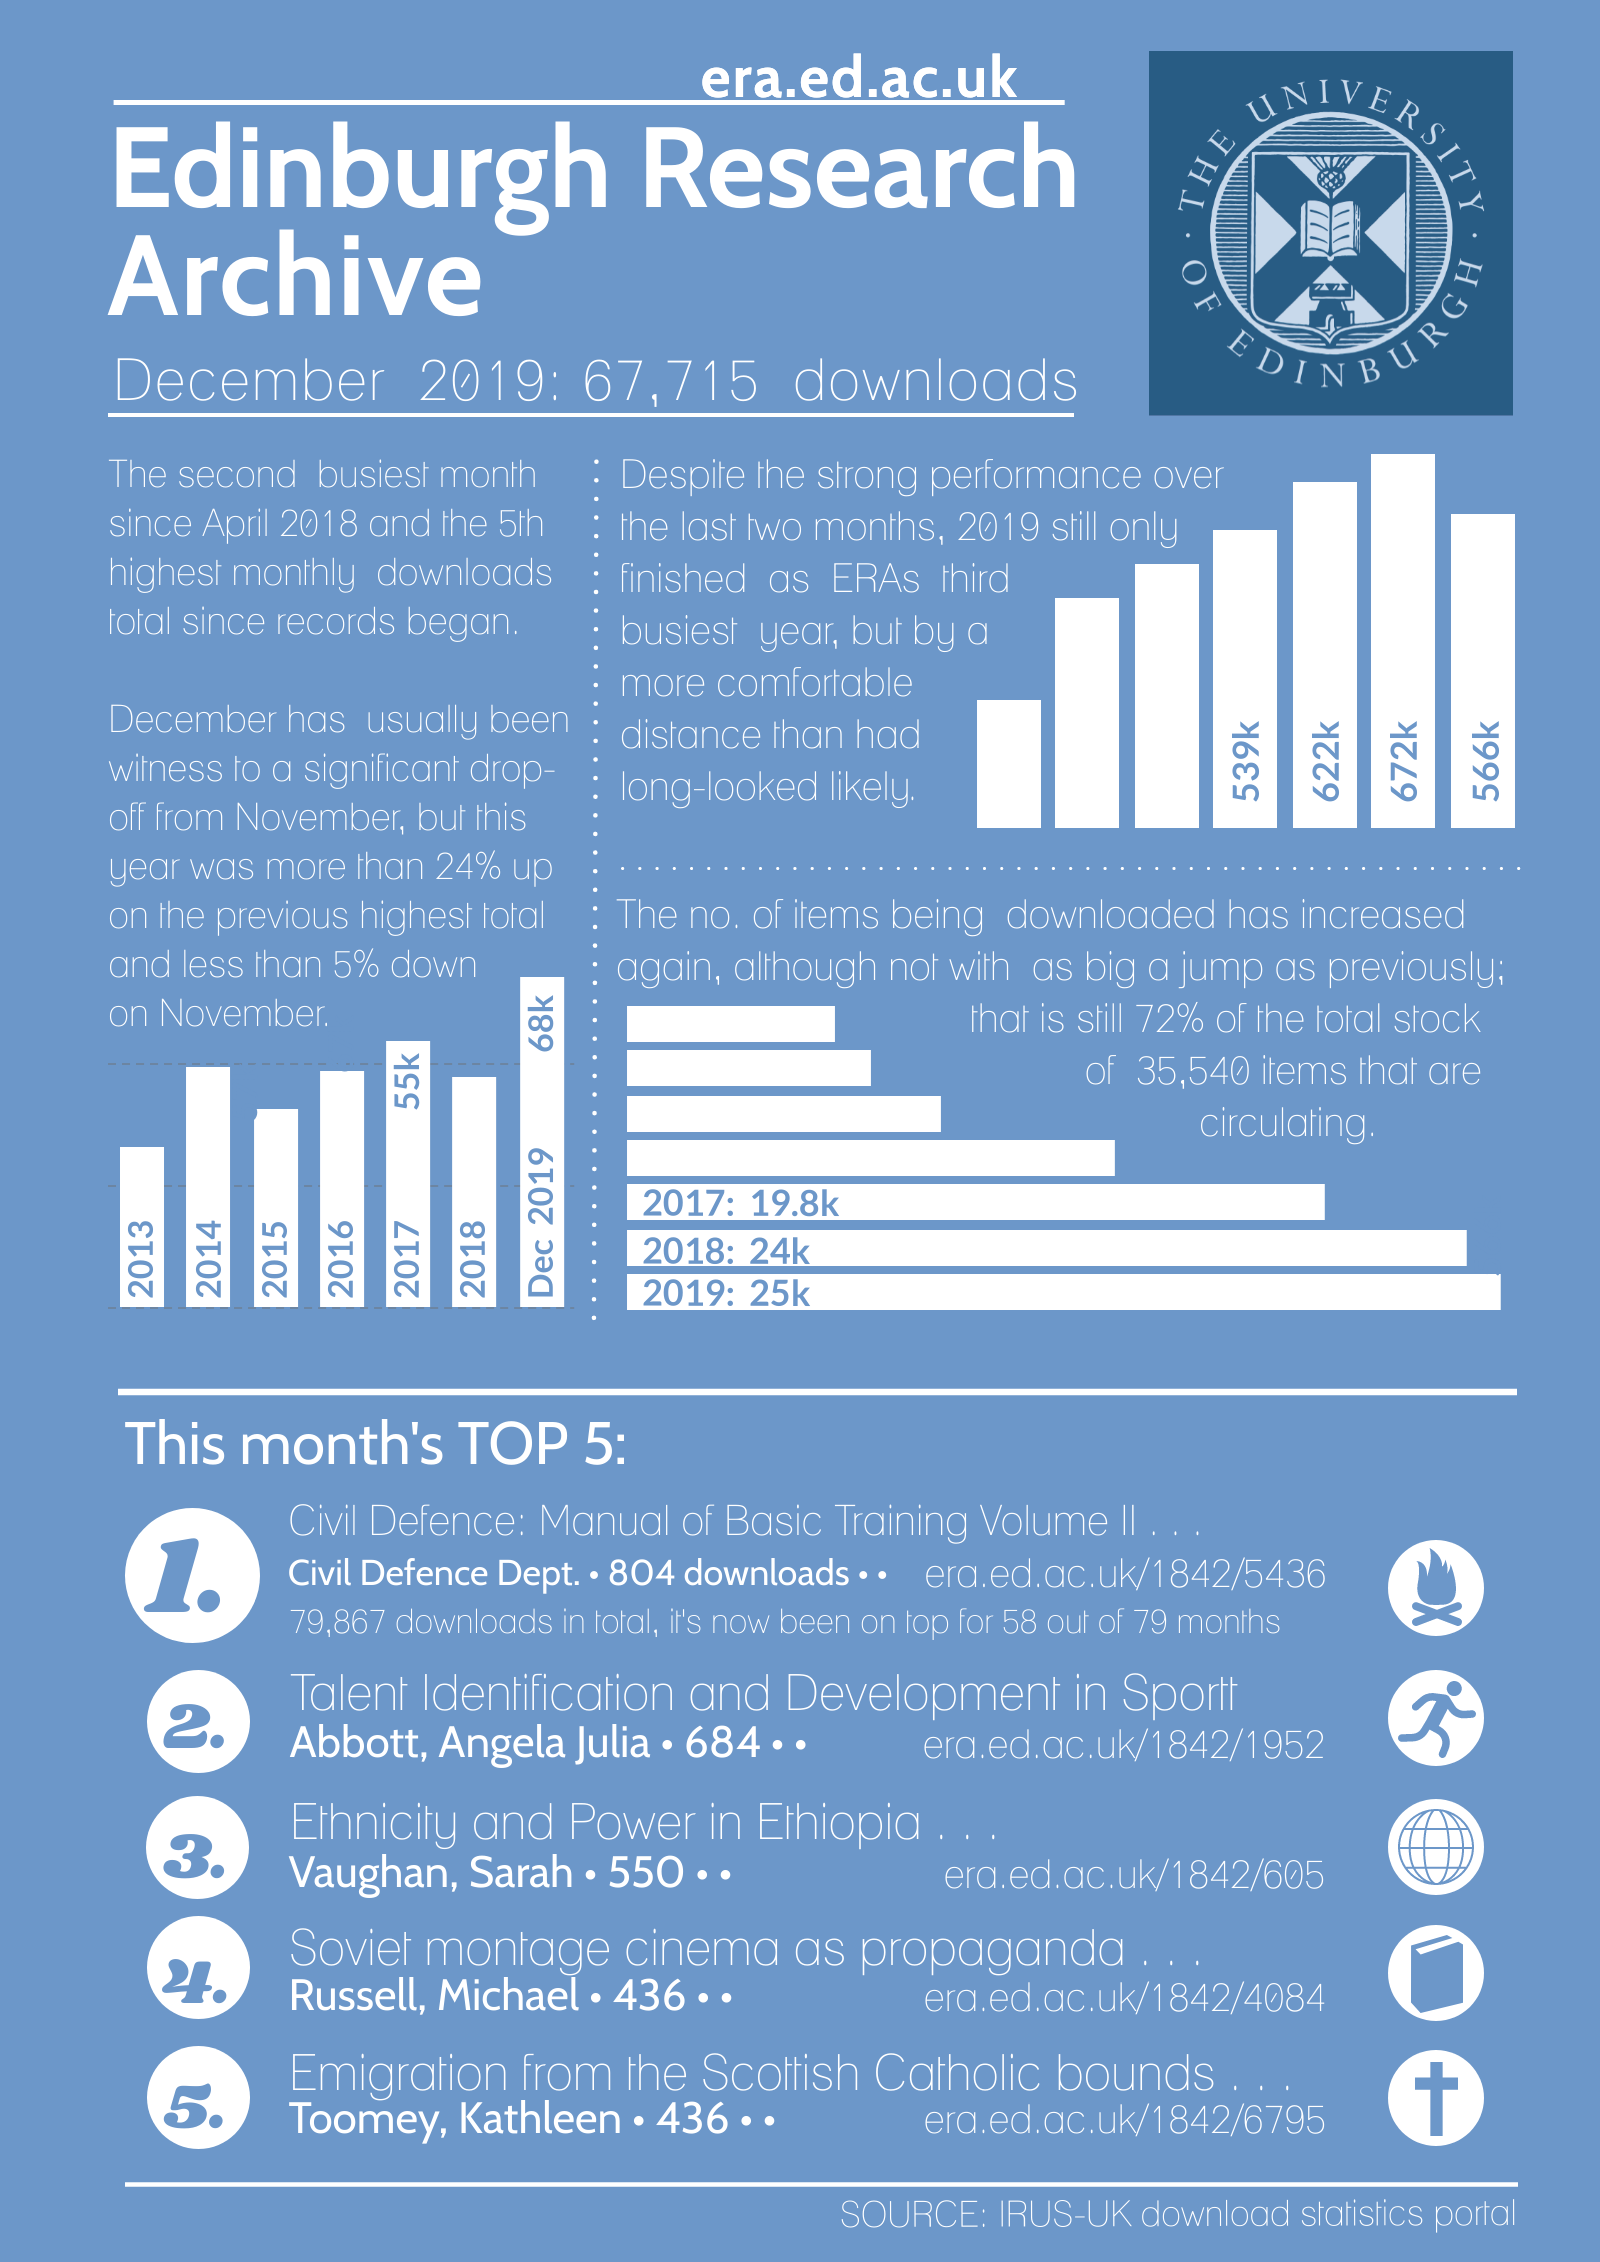 Edinburgh Research Archive: December 2019 downloads infographic